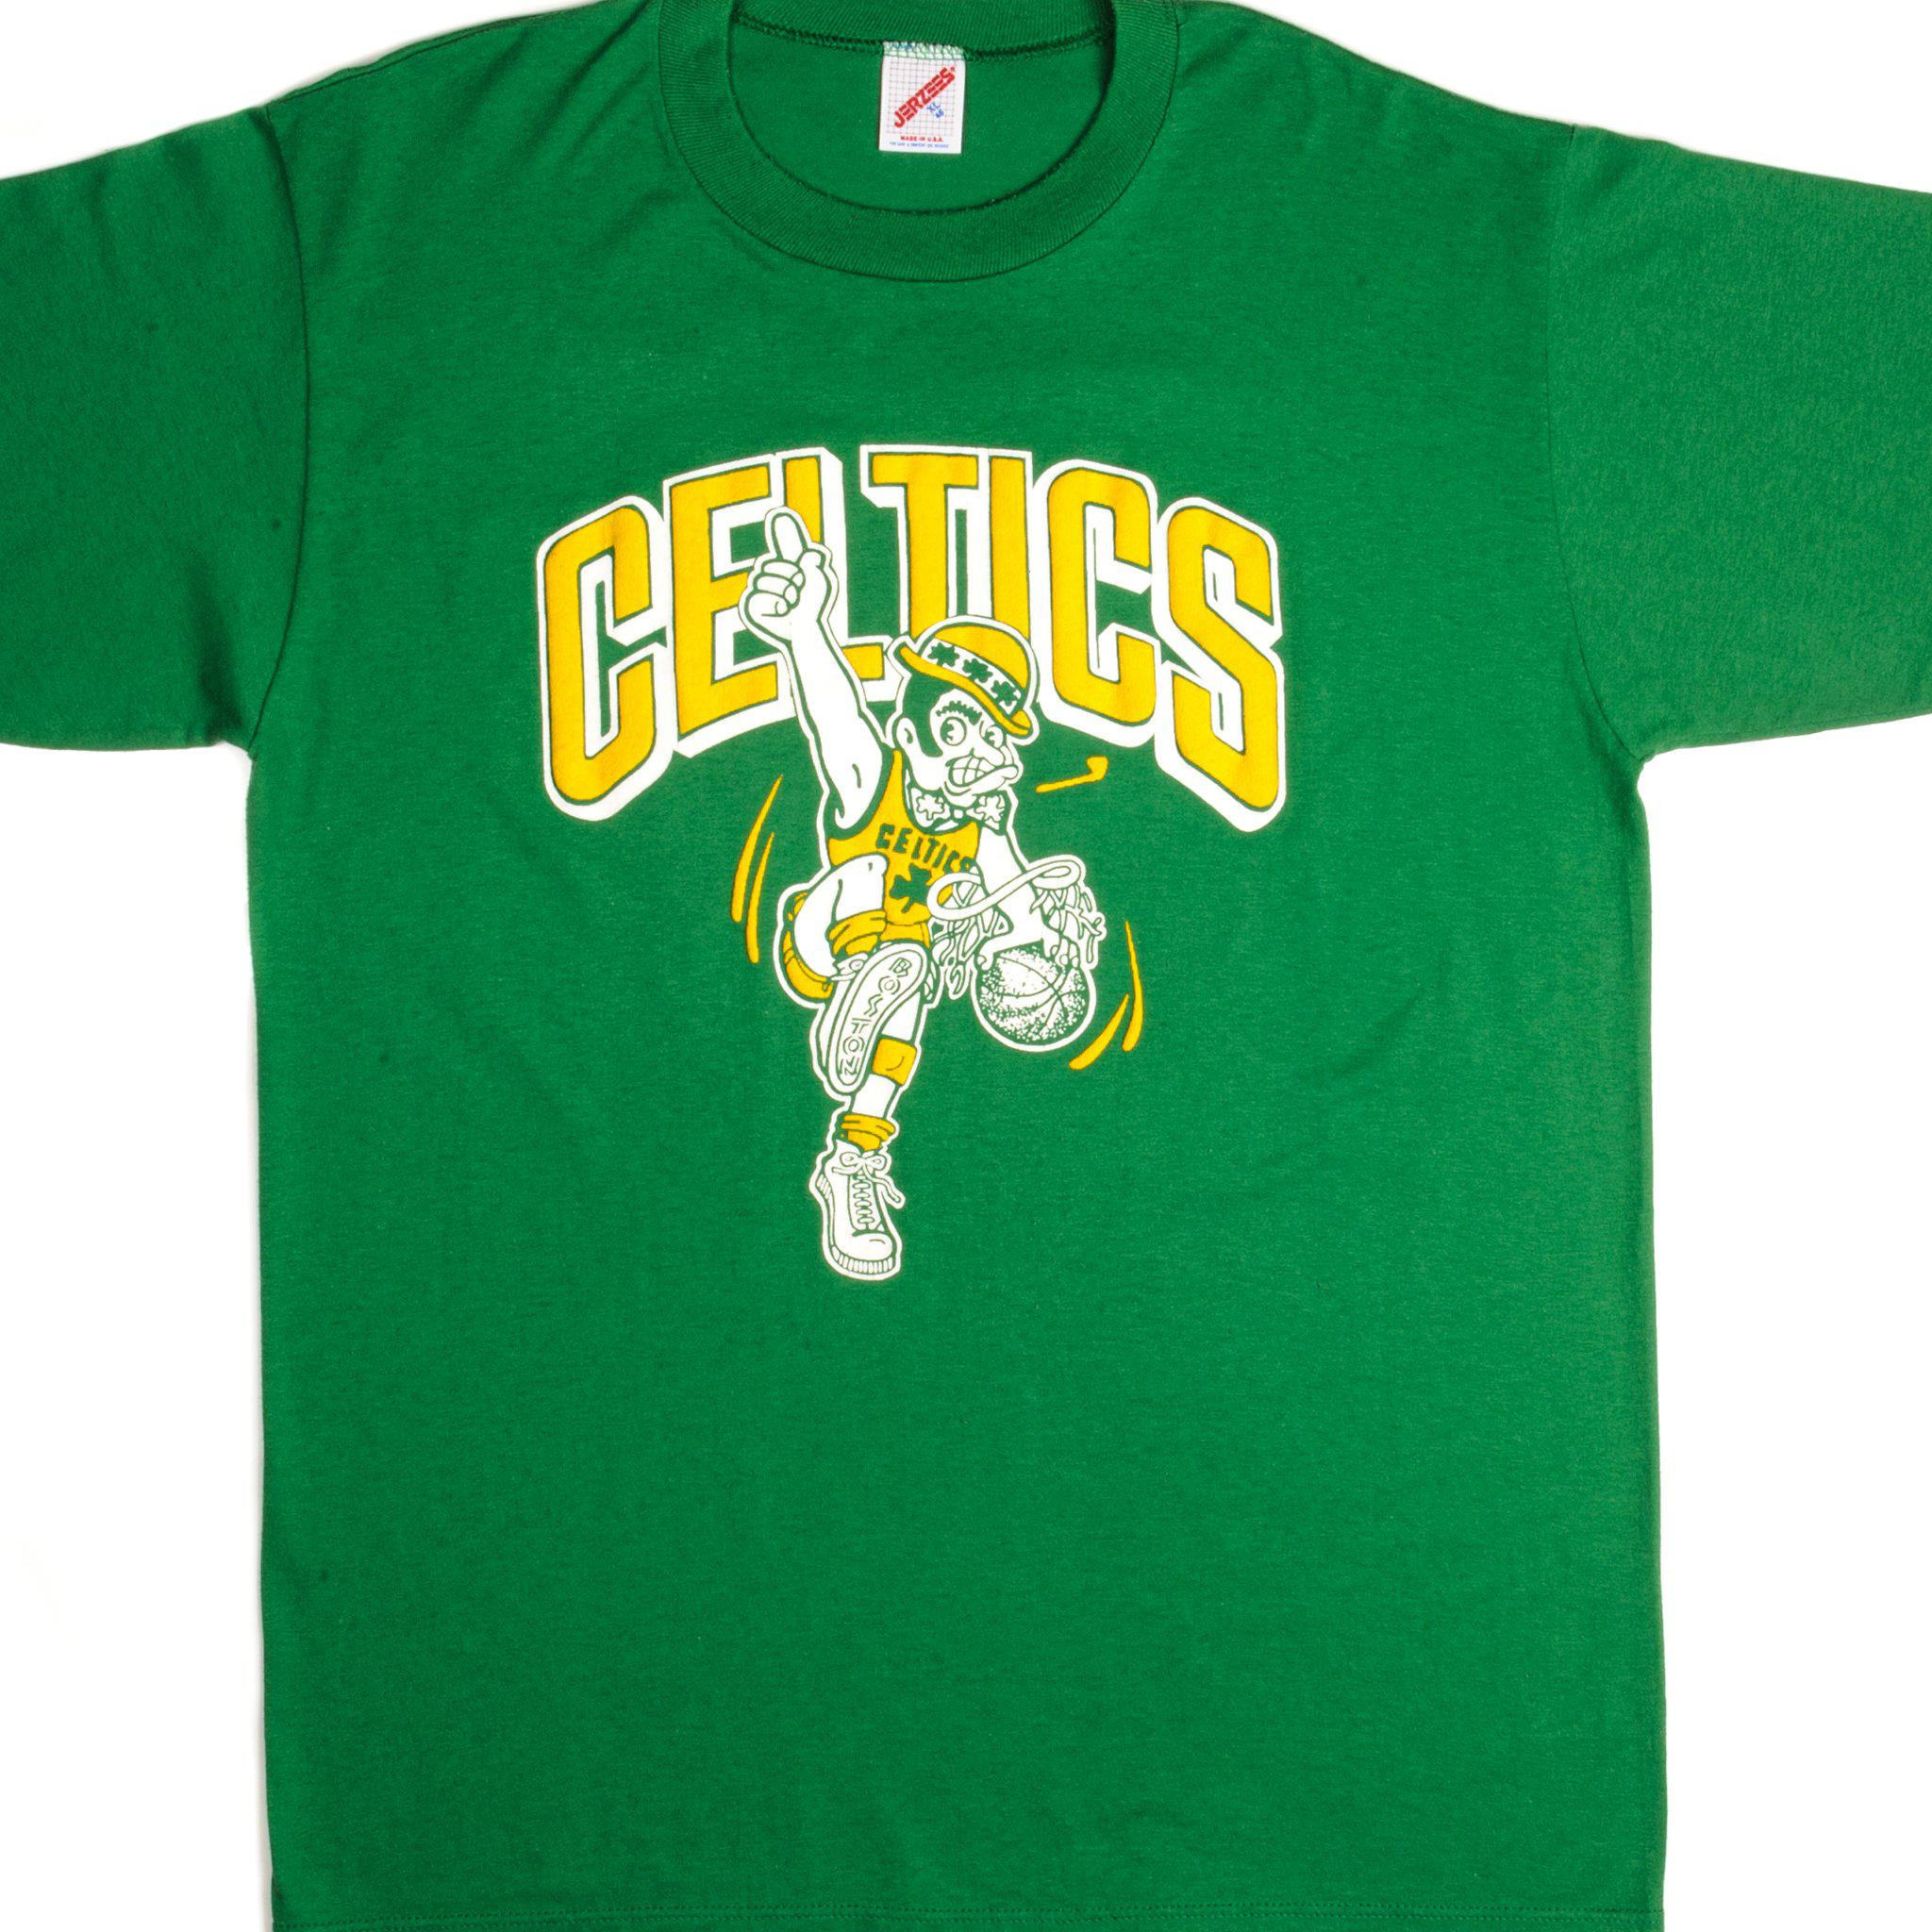 Cheap Boston Celtics Apparel, Discount Celtics Gear, NBA Celtics